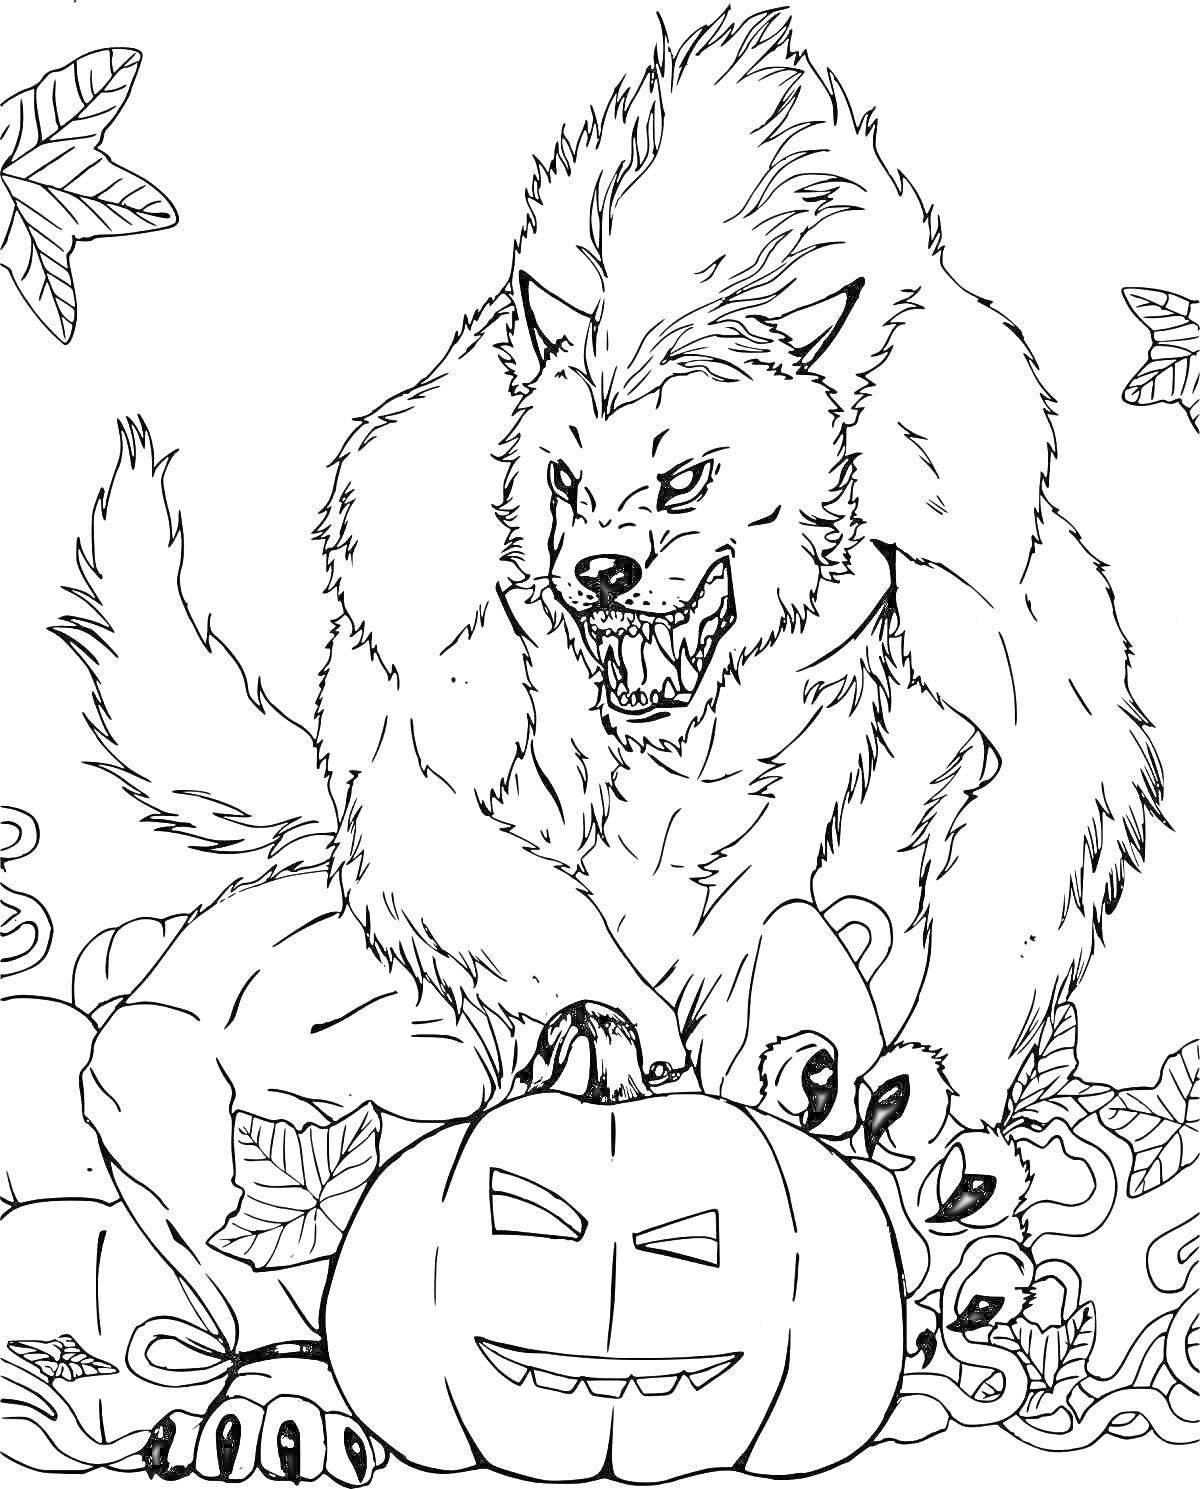 Раскраска Оборотень волк и тыква на Хэллоуин с осенними листьями